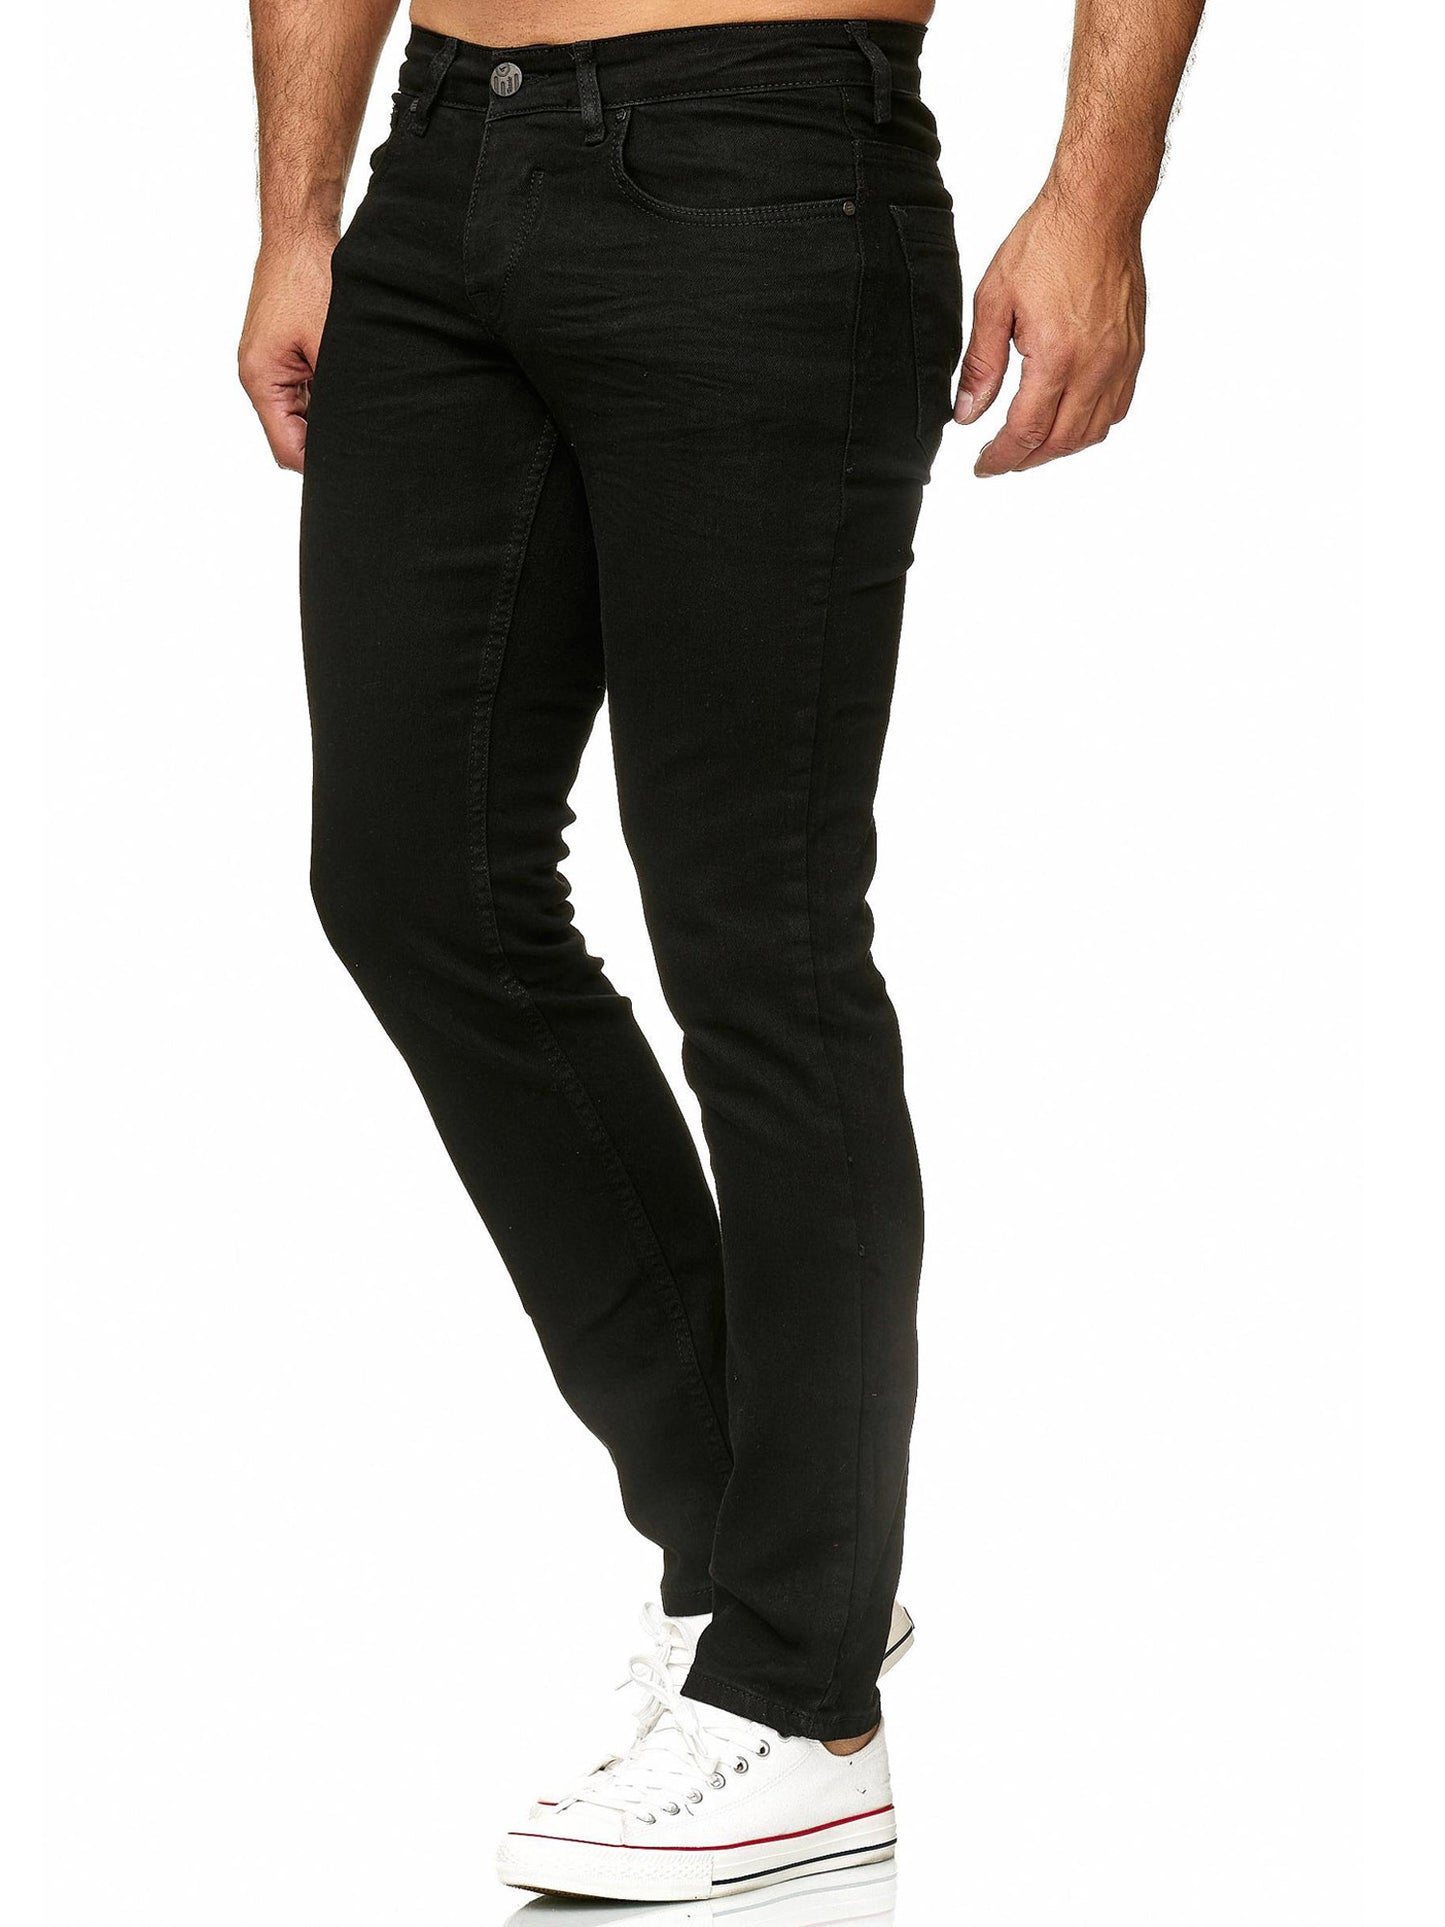 Tazzio Herren Jeans Slim Fit 16533 Black